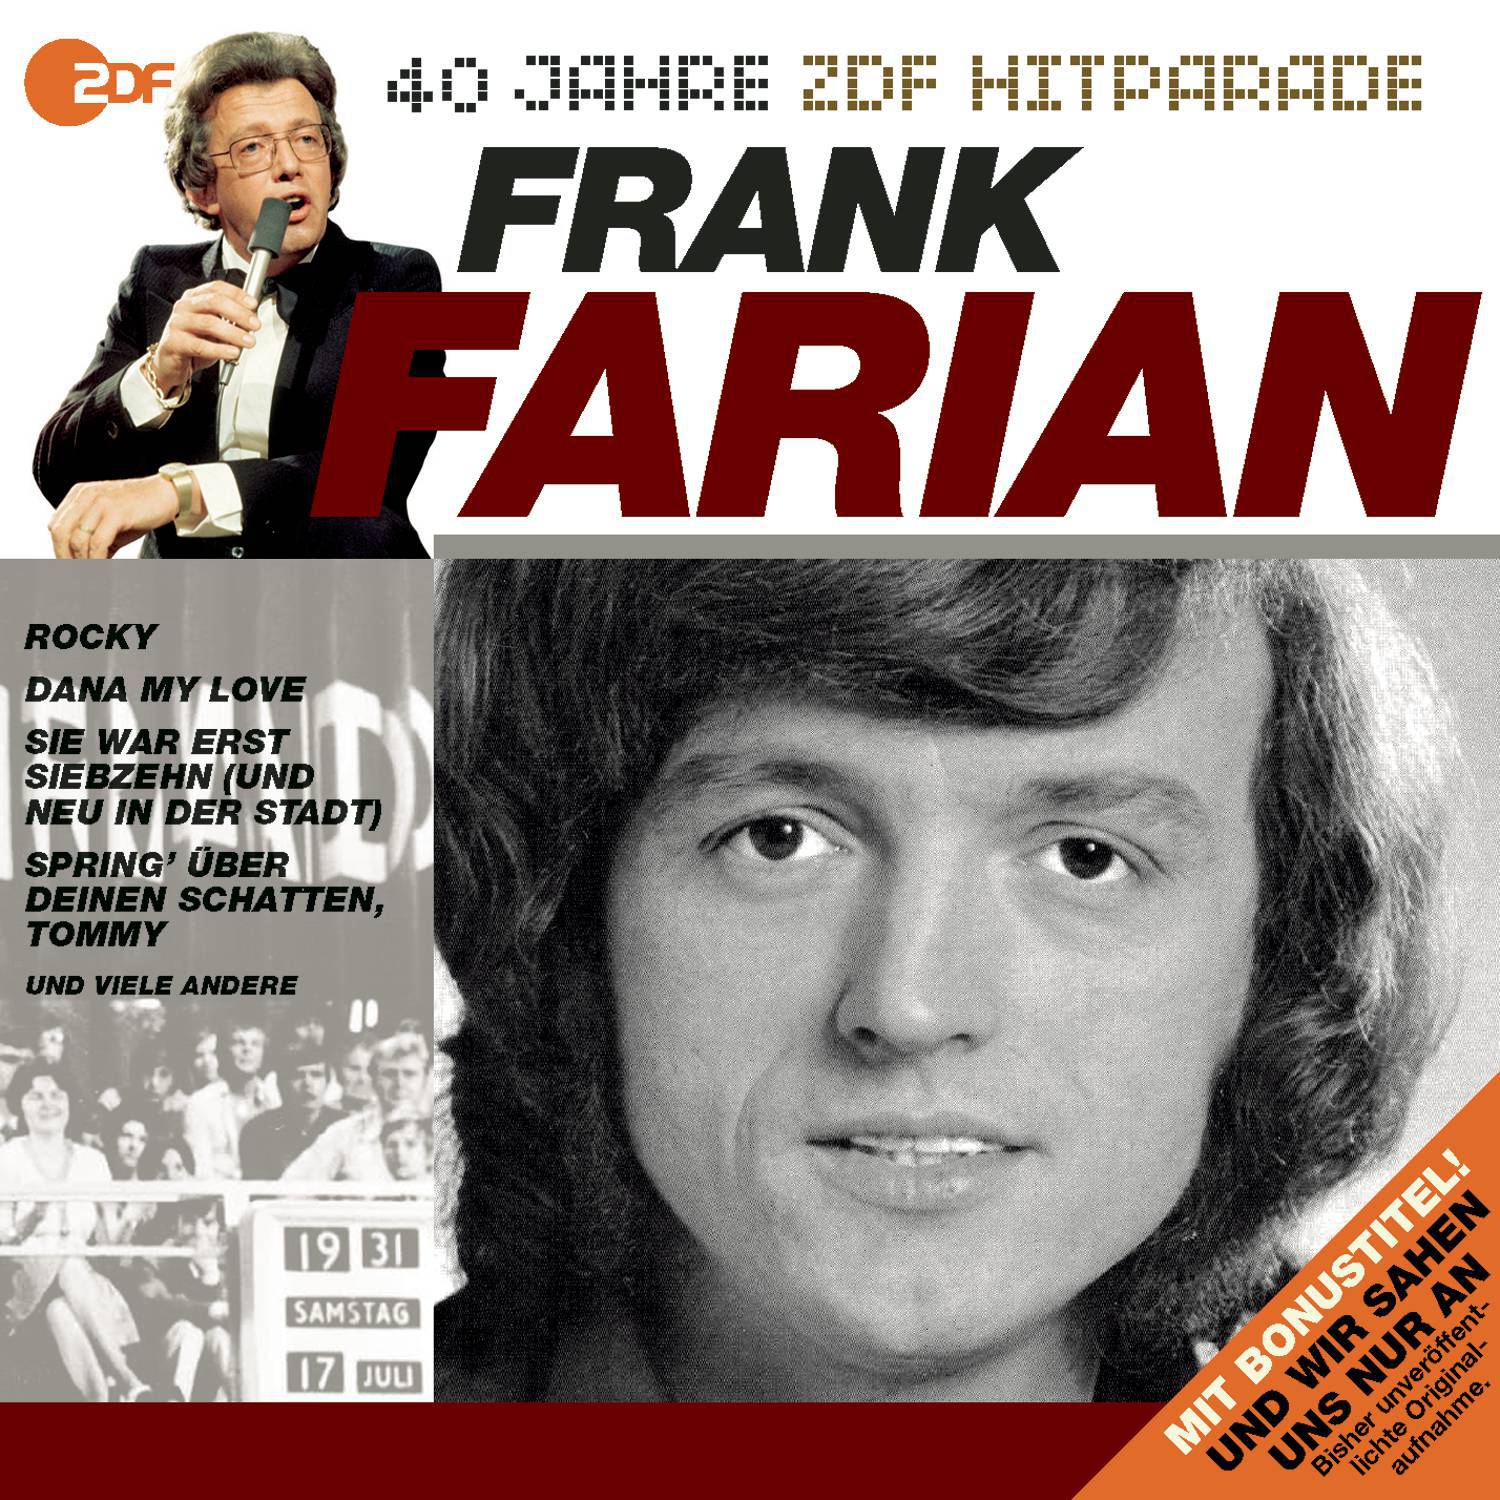 Frank Farian - Ich bin allein - so wie sonst (Alone Again Naturally)